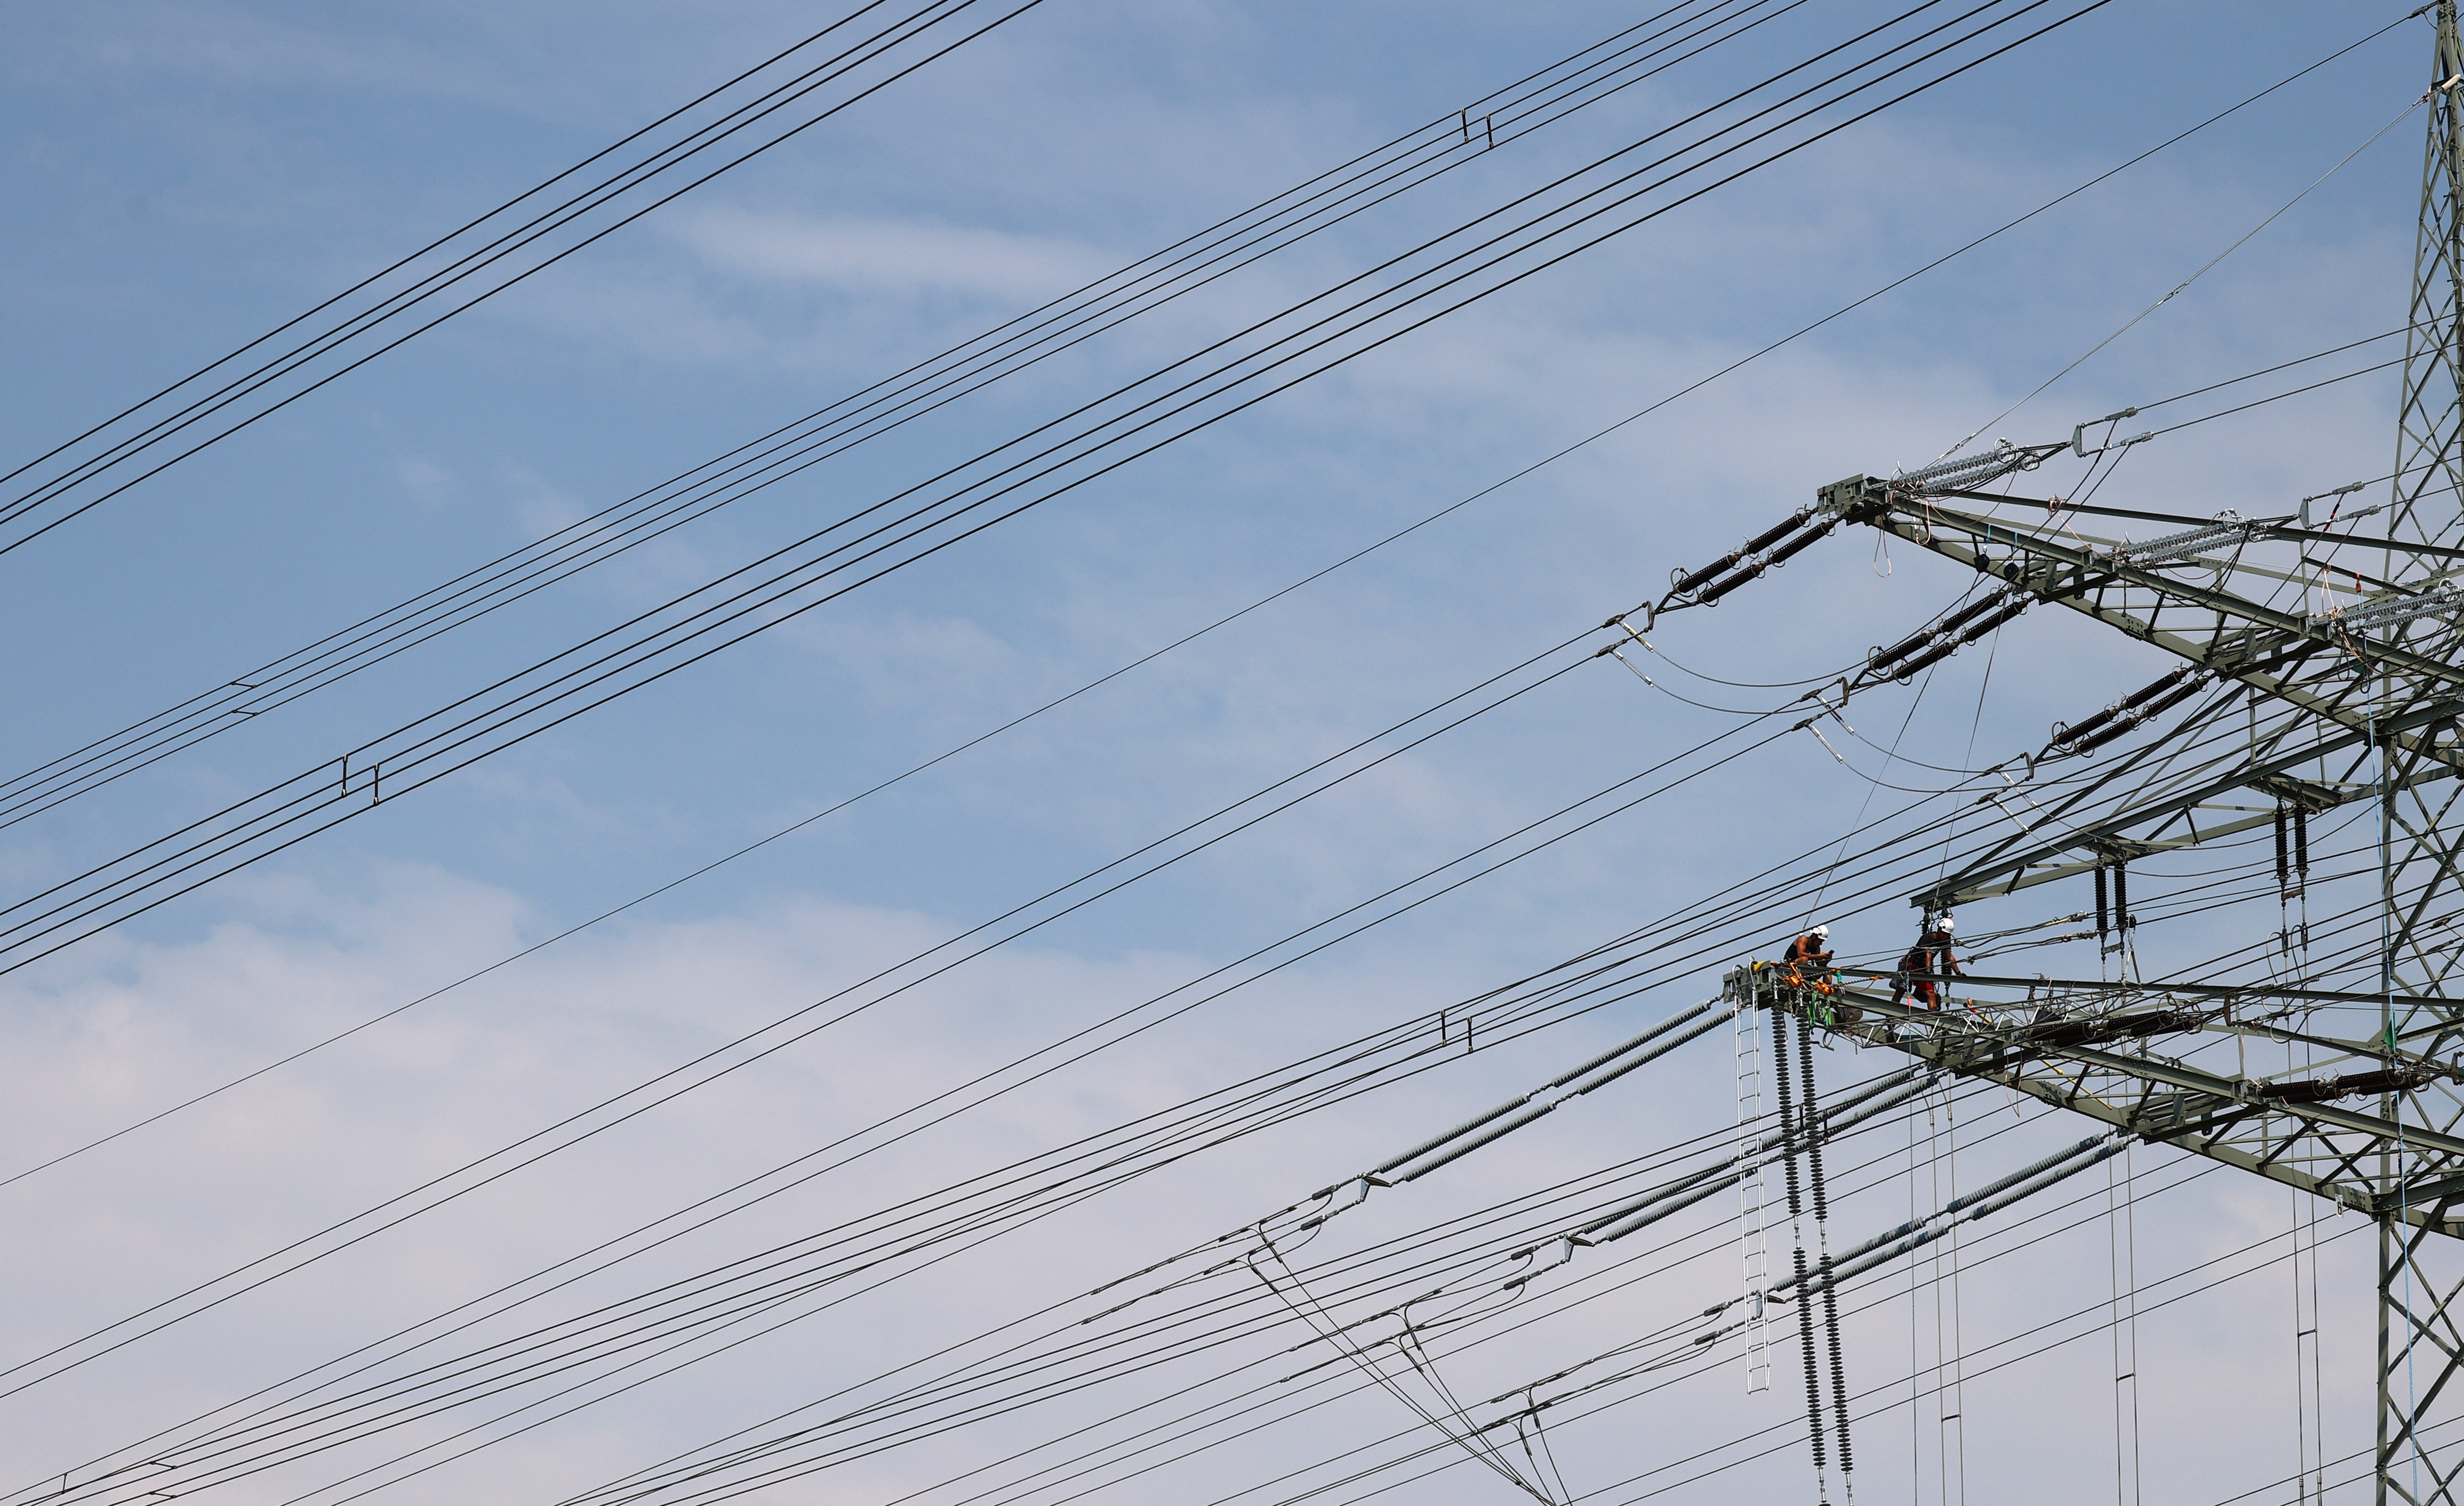 Workers install new high voltage power lines near Hanau, Germany, August 10, 2020. REUTERS/Kai Pfaffenbach